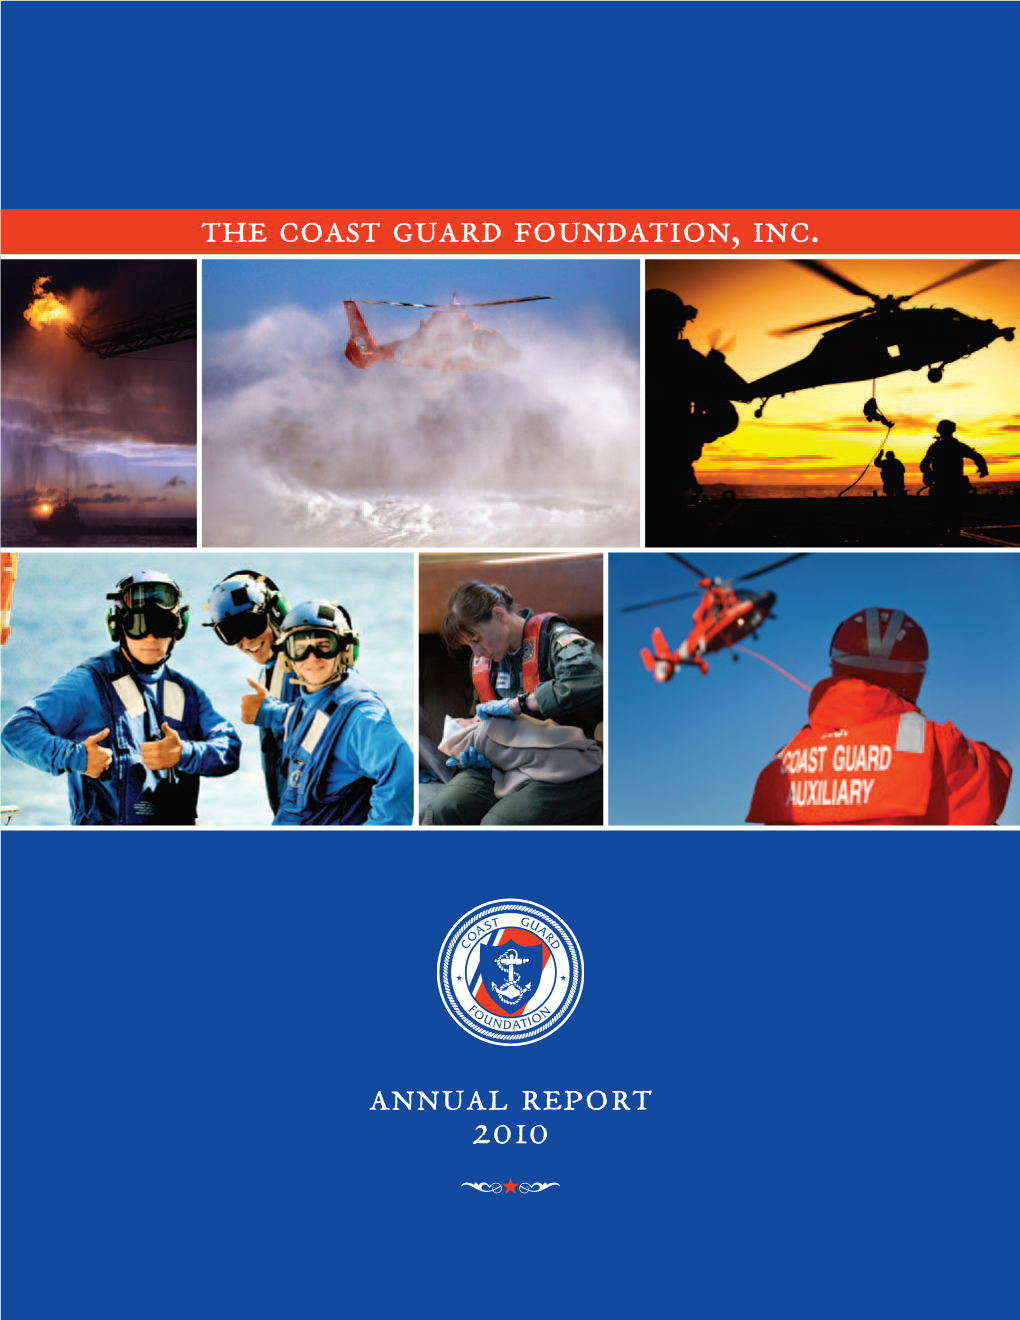 The Coast Guard Foundation, Inc. Annual Report 2010